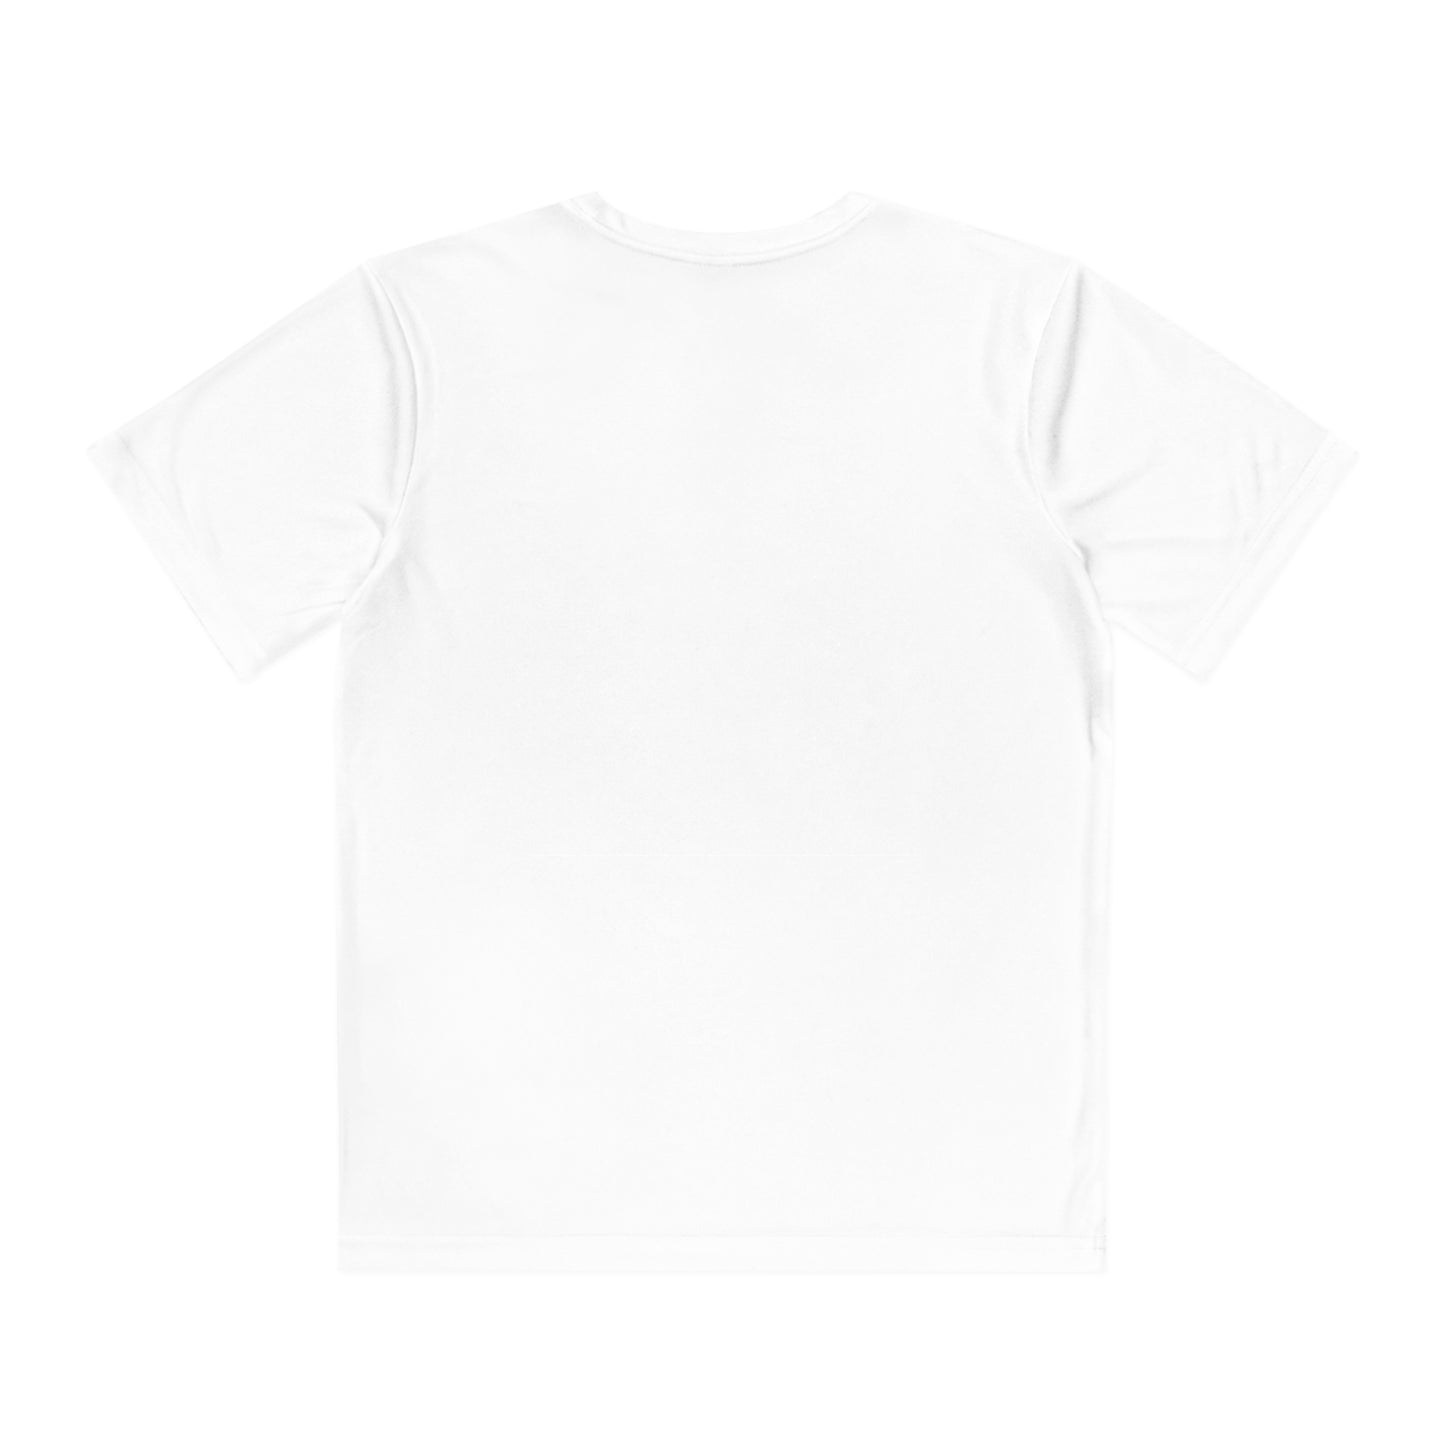 YOUTH - "Blackout Baseball" Moisture-Wicking T-Shirt - (White)